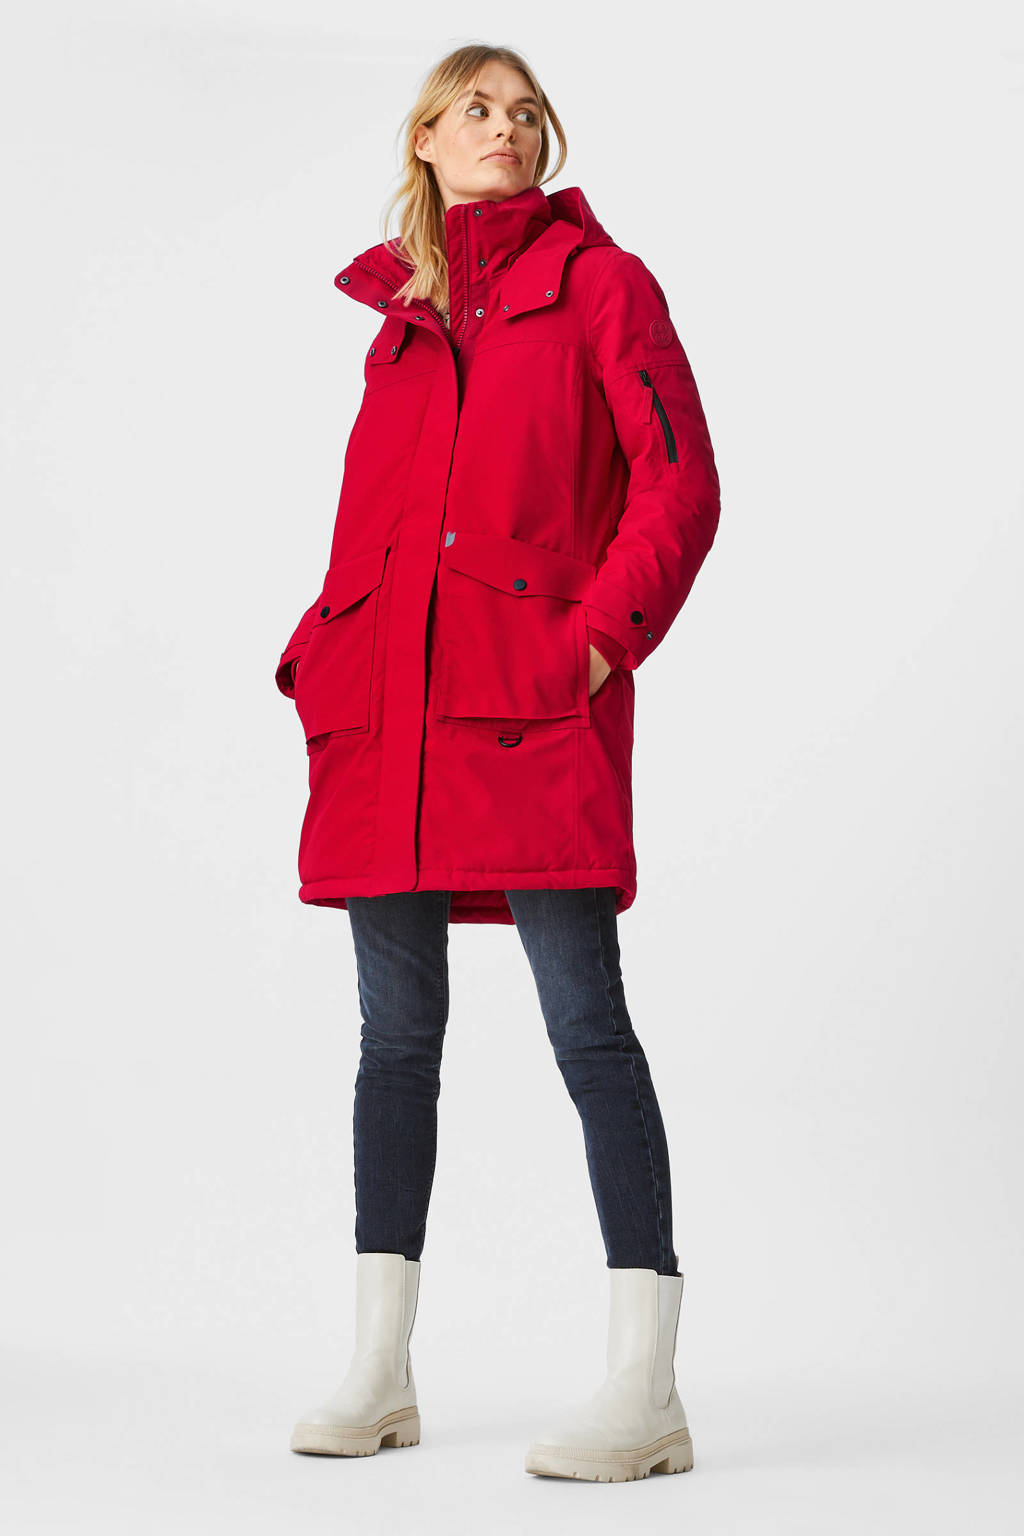 Rode dames C&A jas van polyester met lange mouwen, capuchon en rits- en drukknoopsluiting